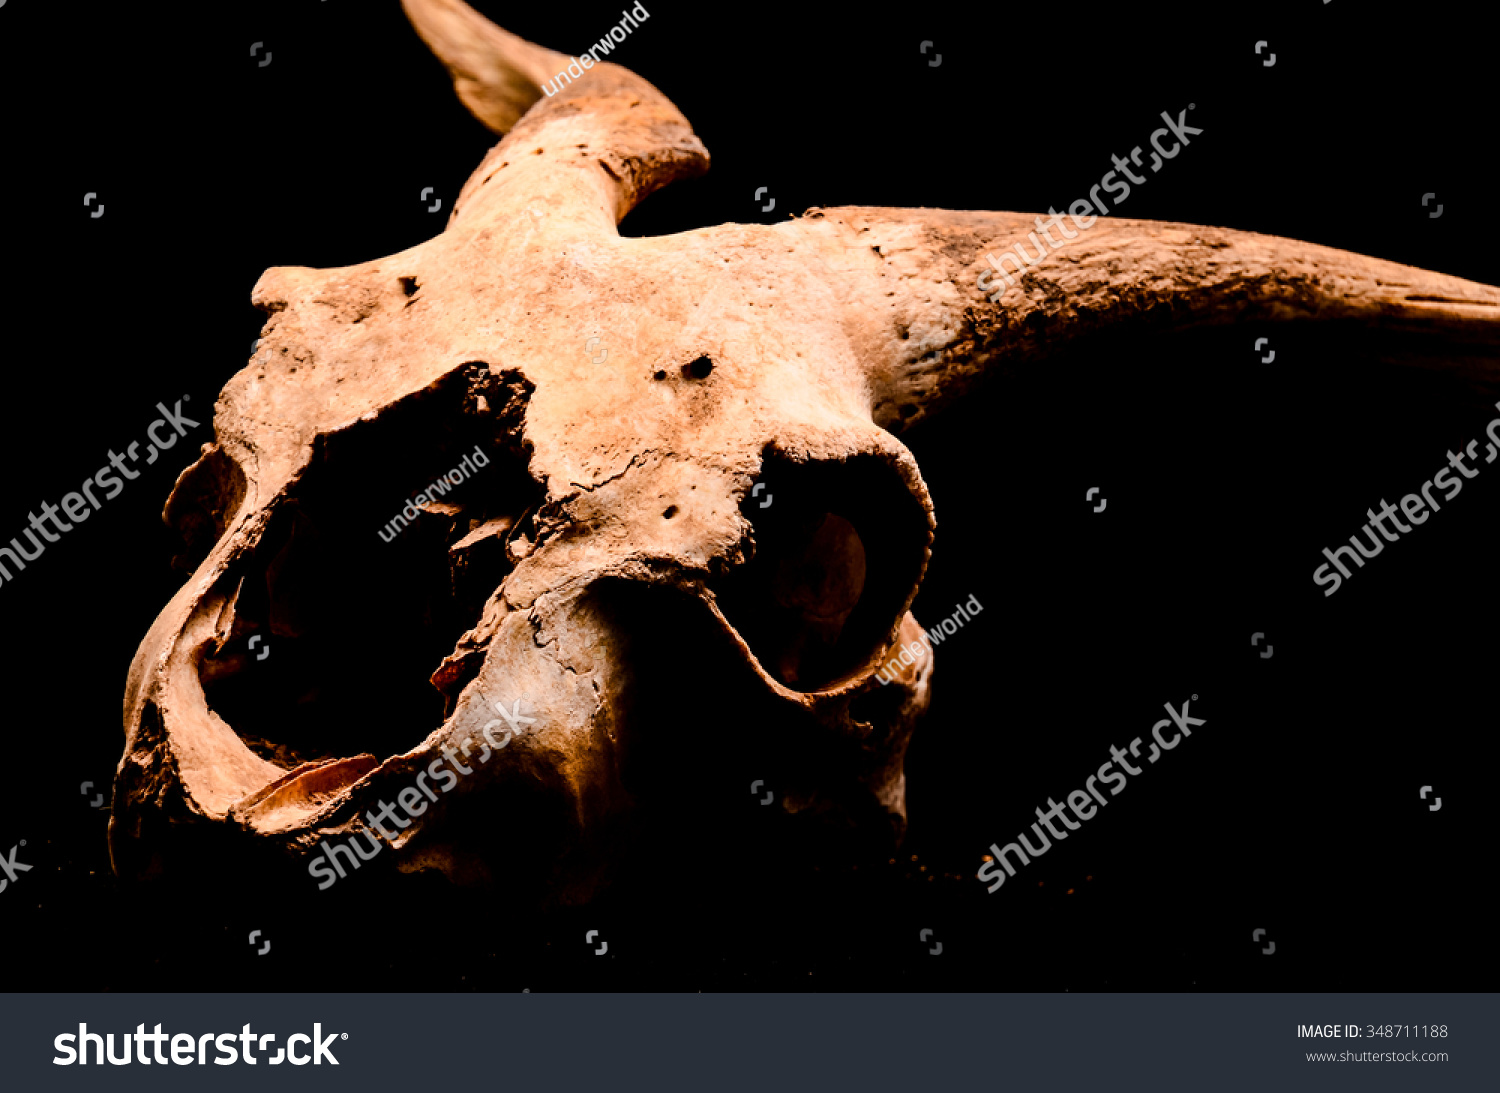 Dry Goat Skull with Big Horns on Black Background #348711188